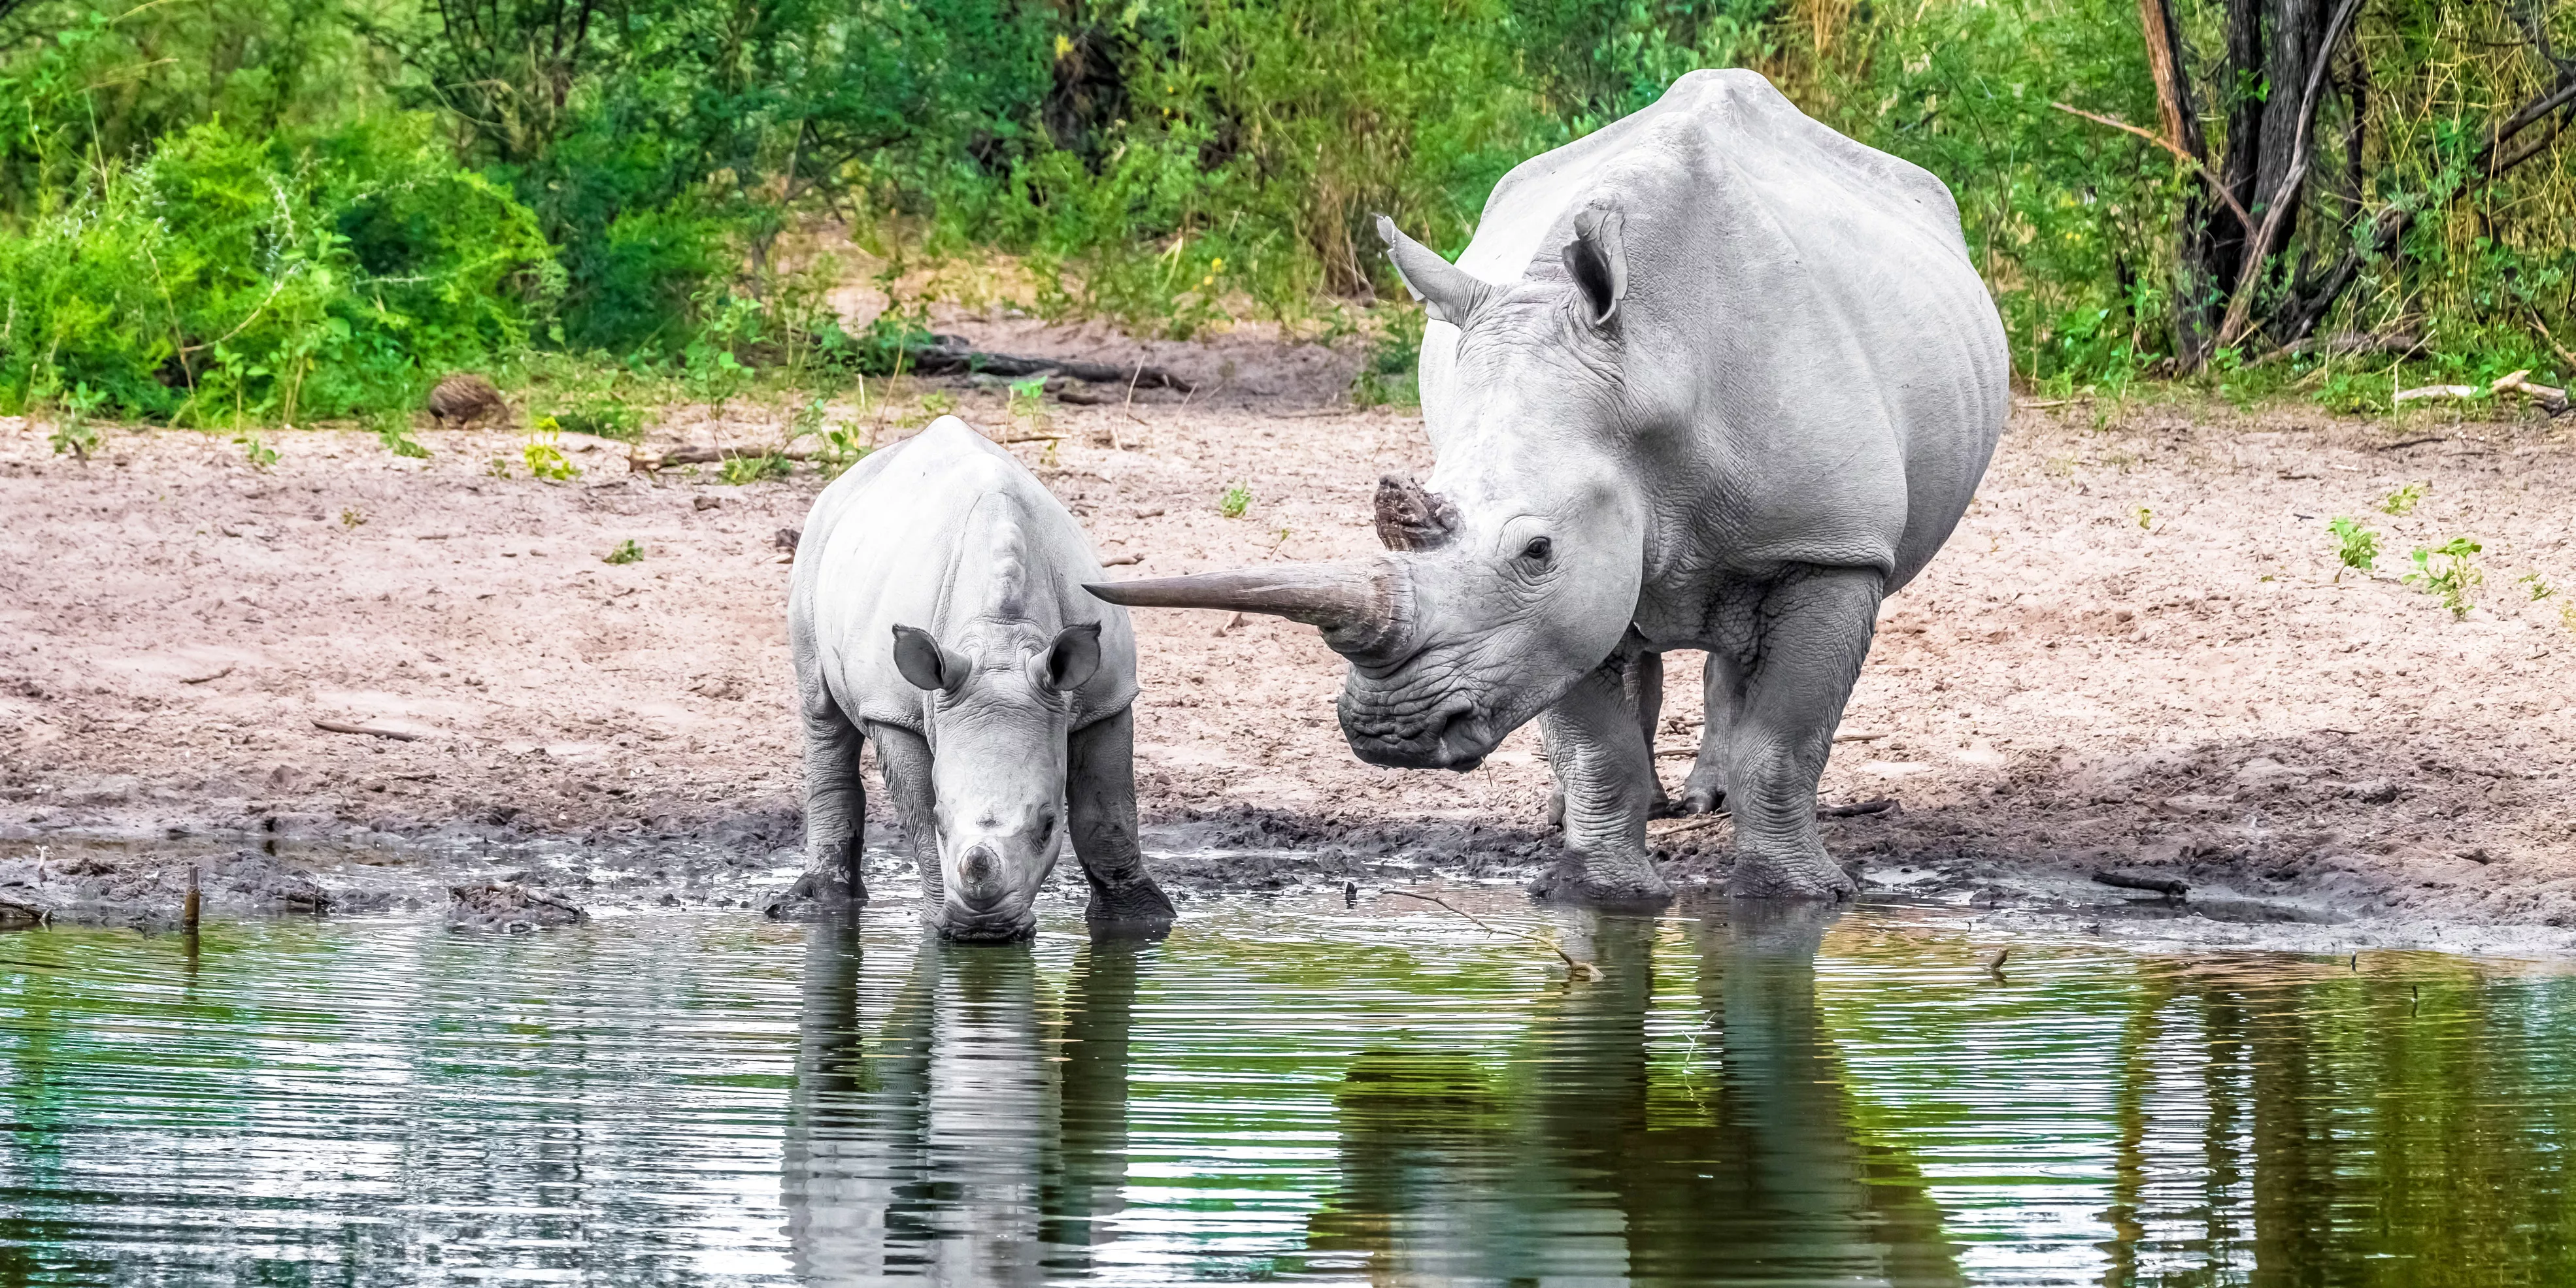 Khama Rhino Sanctuary in Botswana, Africa | Zoos & Sanctuaries,Parks - Rated 3.6